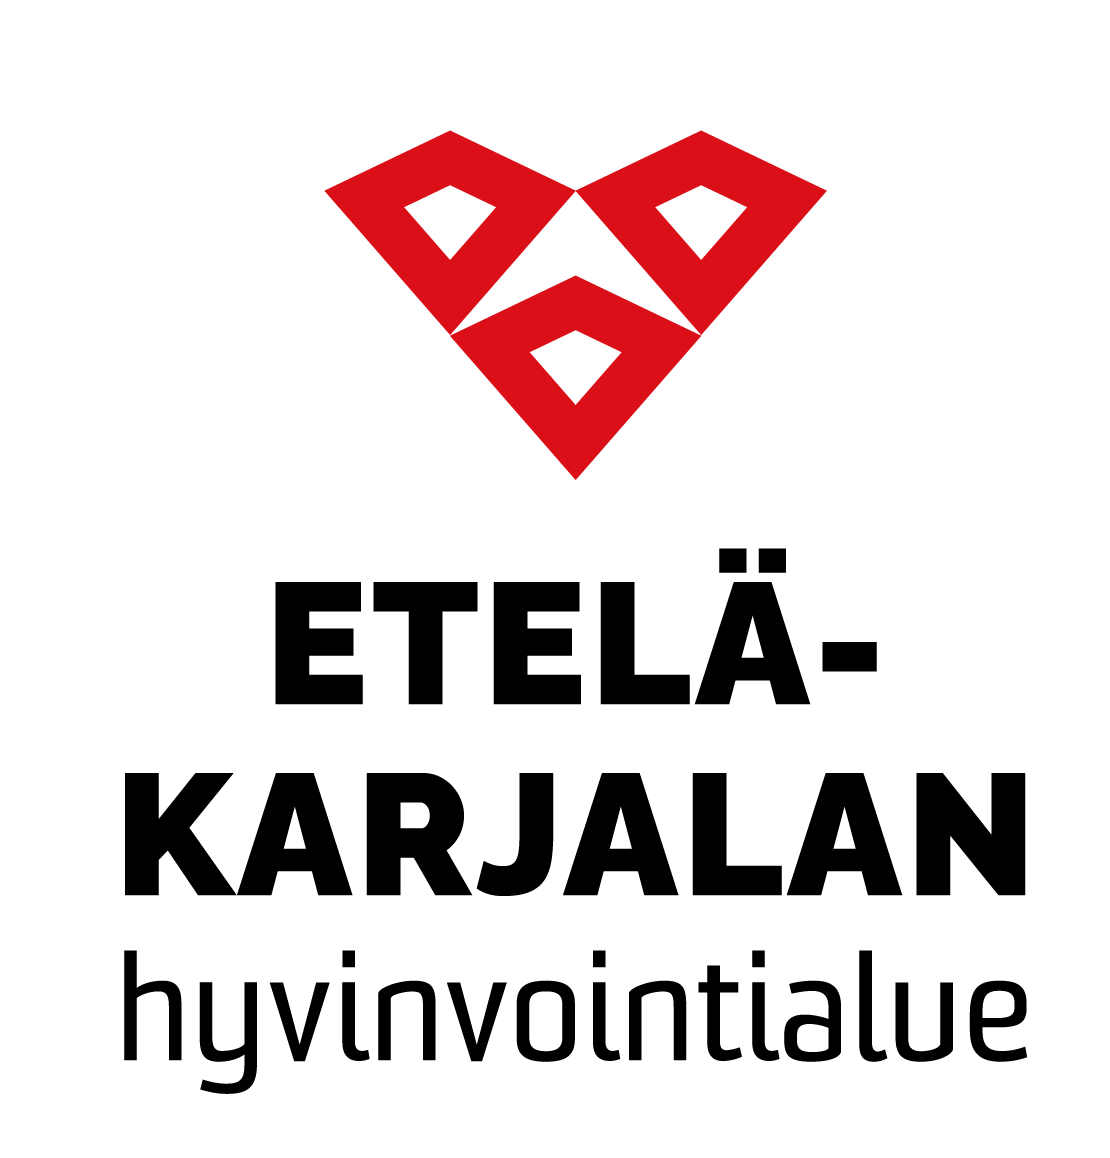 Eksote logo